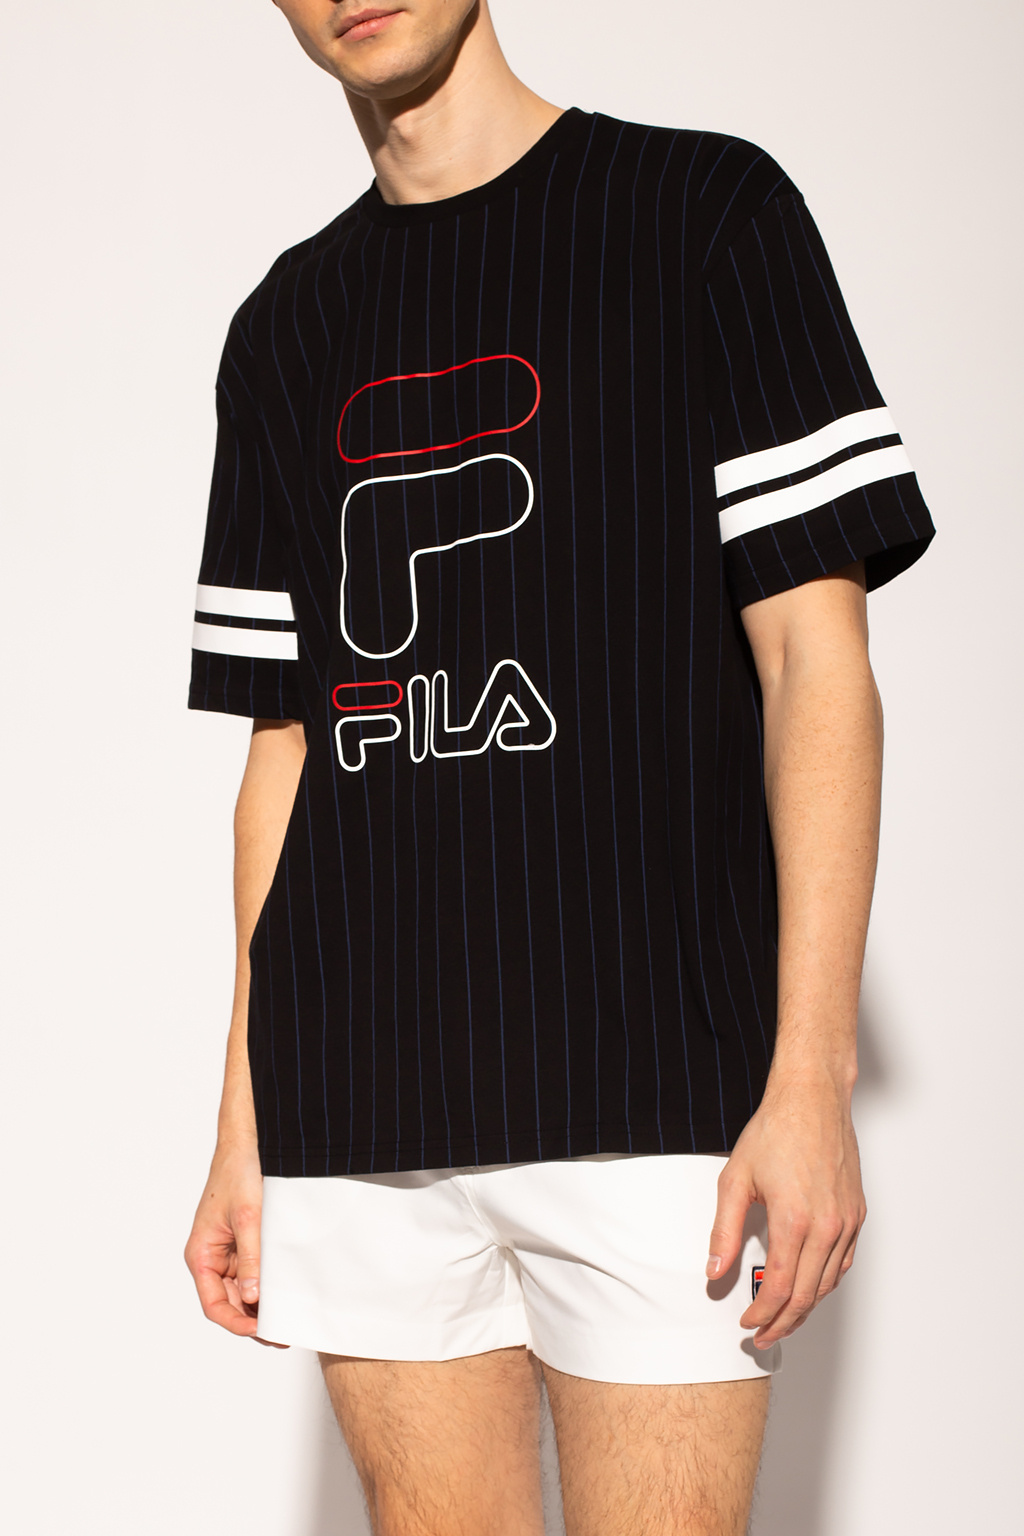 Welvarend Strikt Zenuwinzinking Fila Logo T-shirt | Men's Clothing | Vitkac